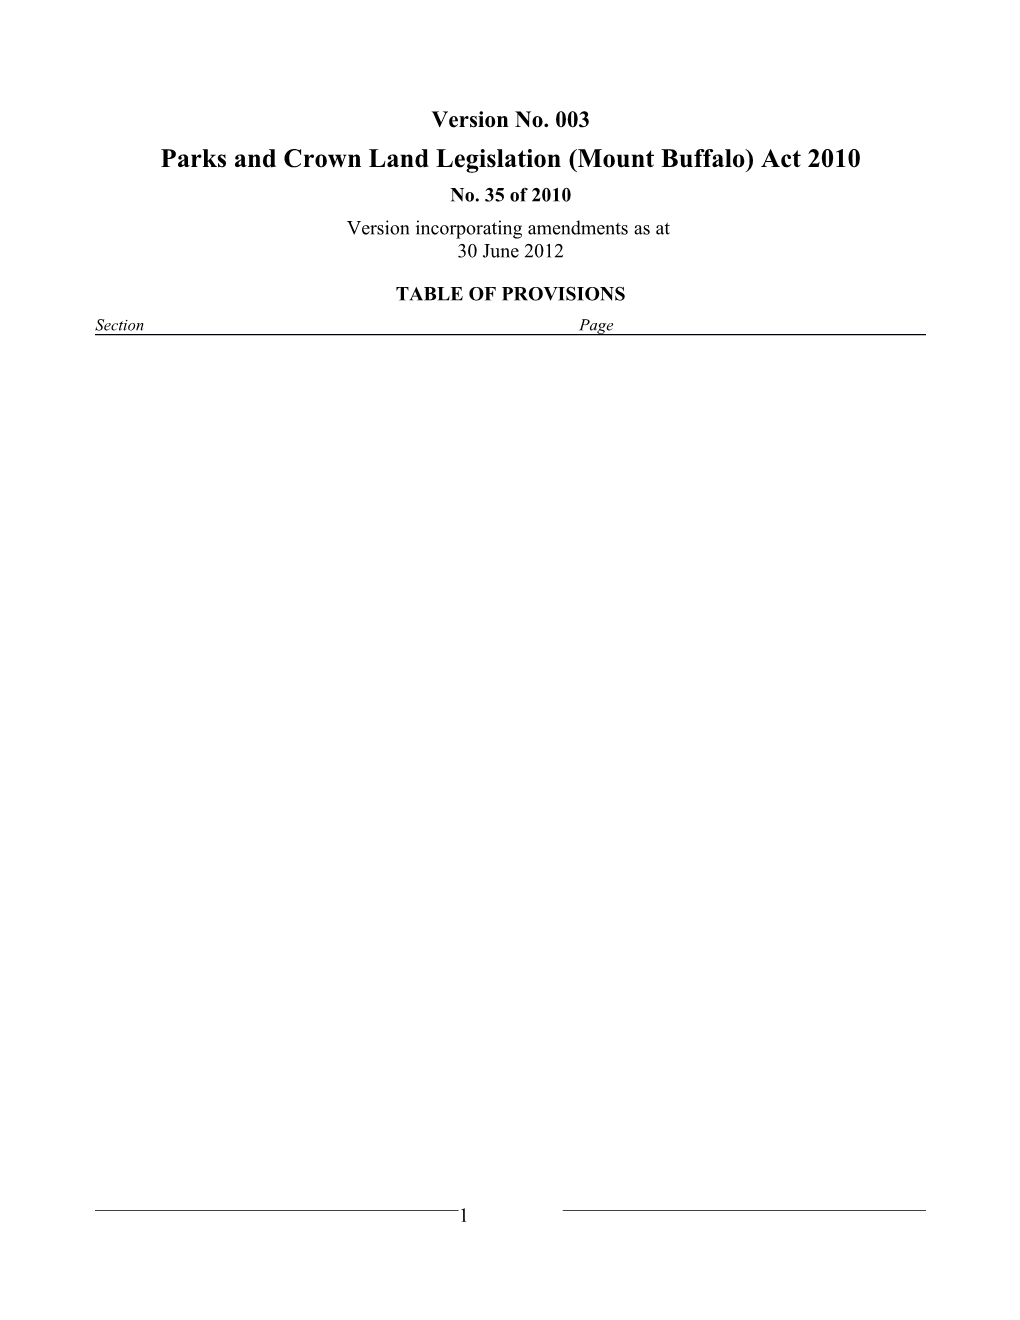 Parks and Crown Land Legislation (Mount Buffalo) Act 2010